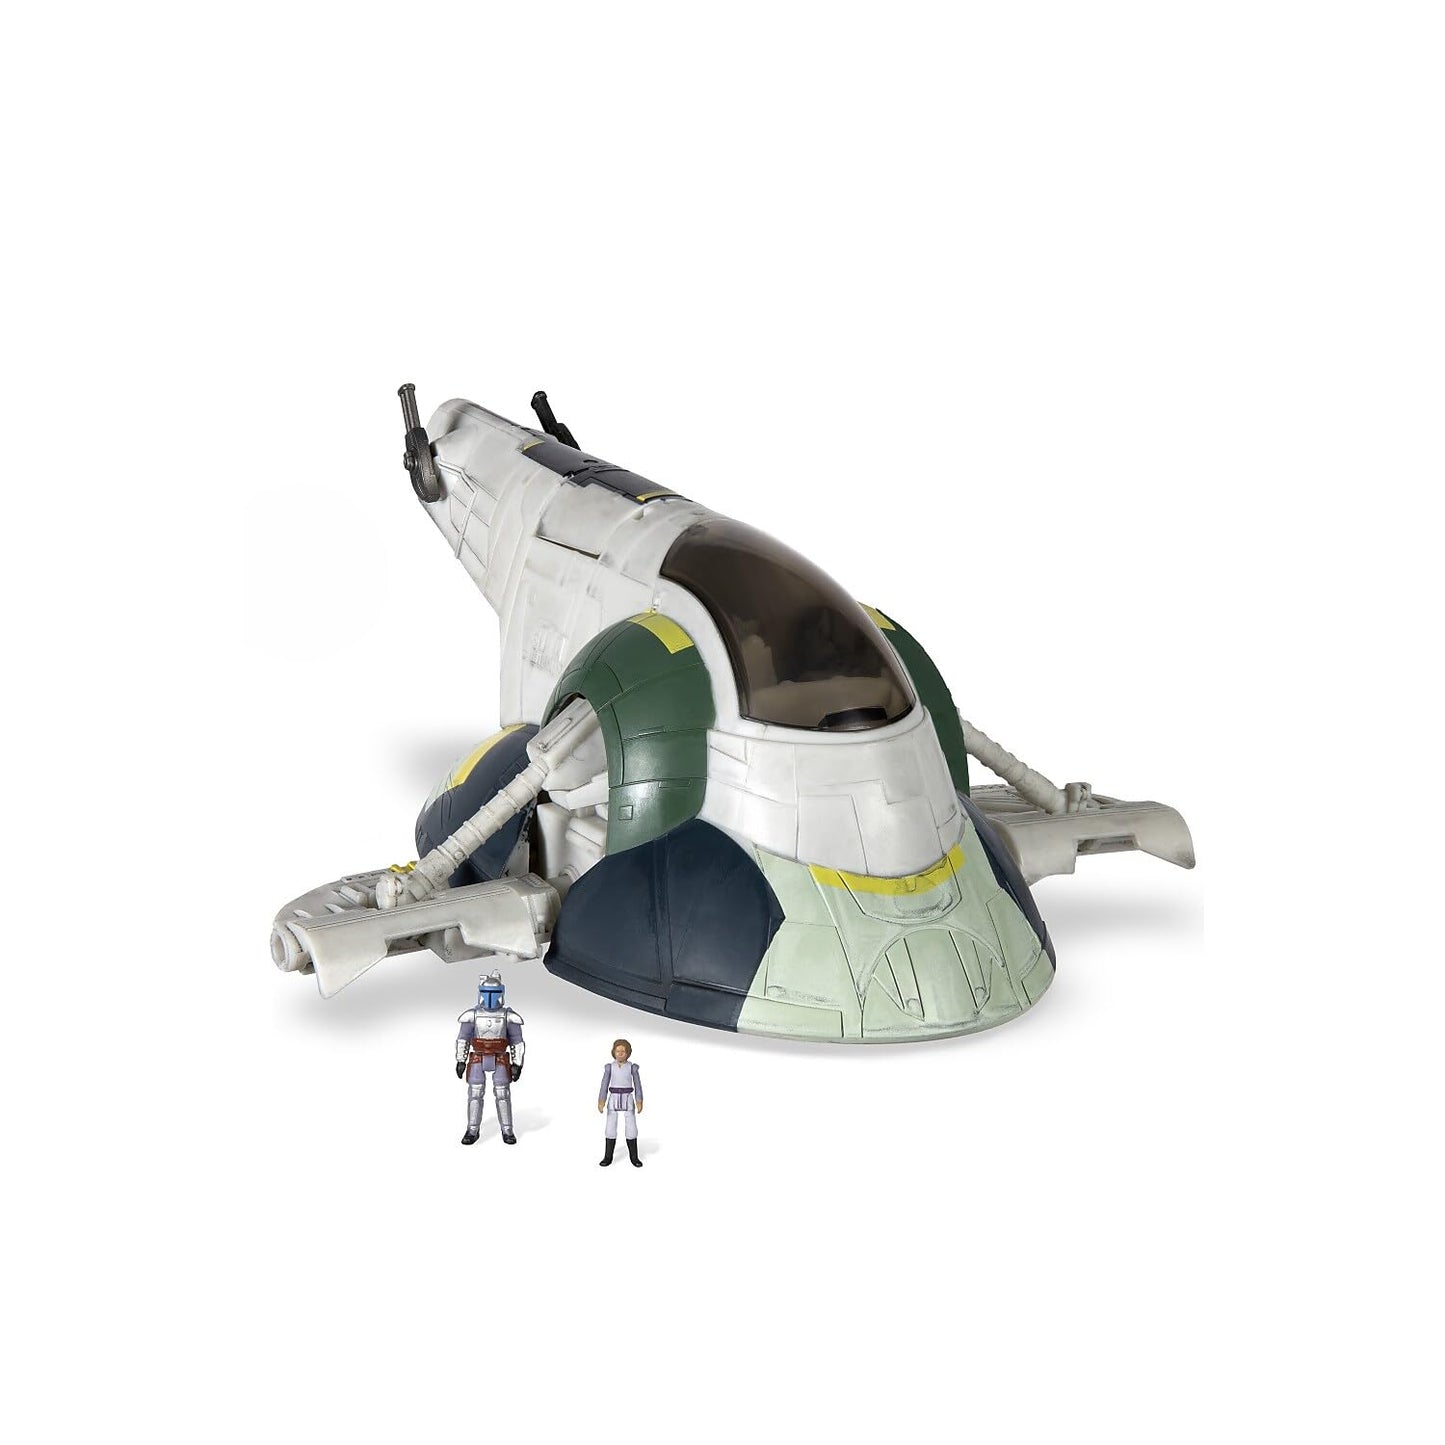 Star Wars Deluxe Vehicle, 8-inchVehicle & Figure, Jango Fett's Starship (SWJ0031)